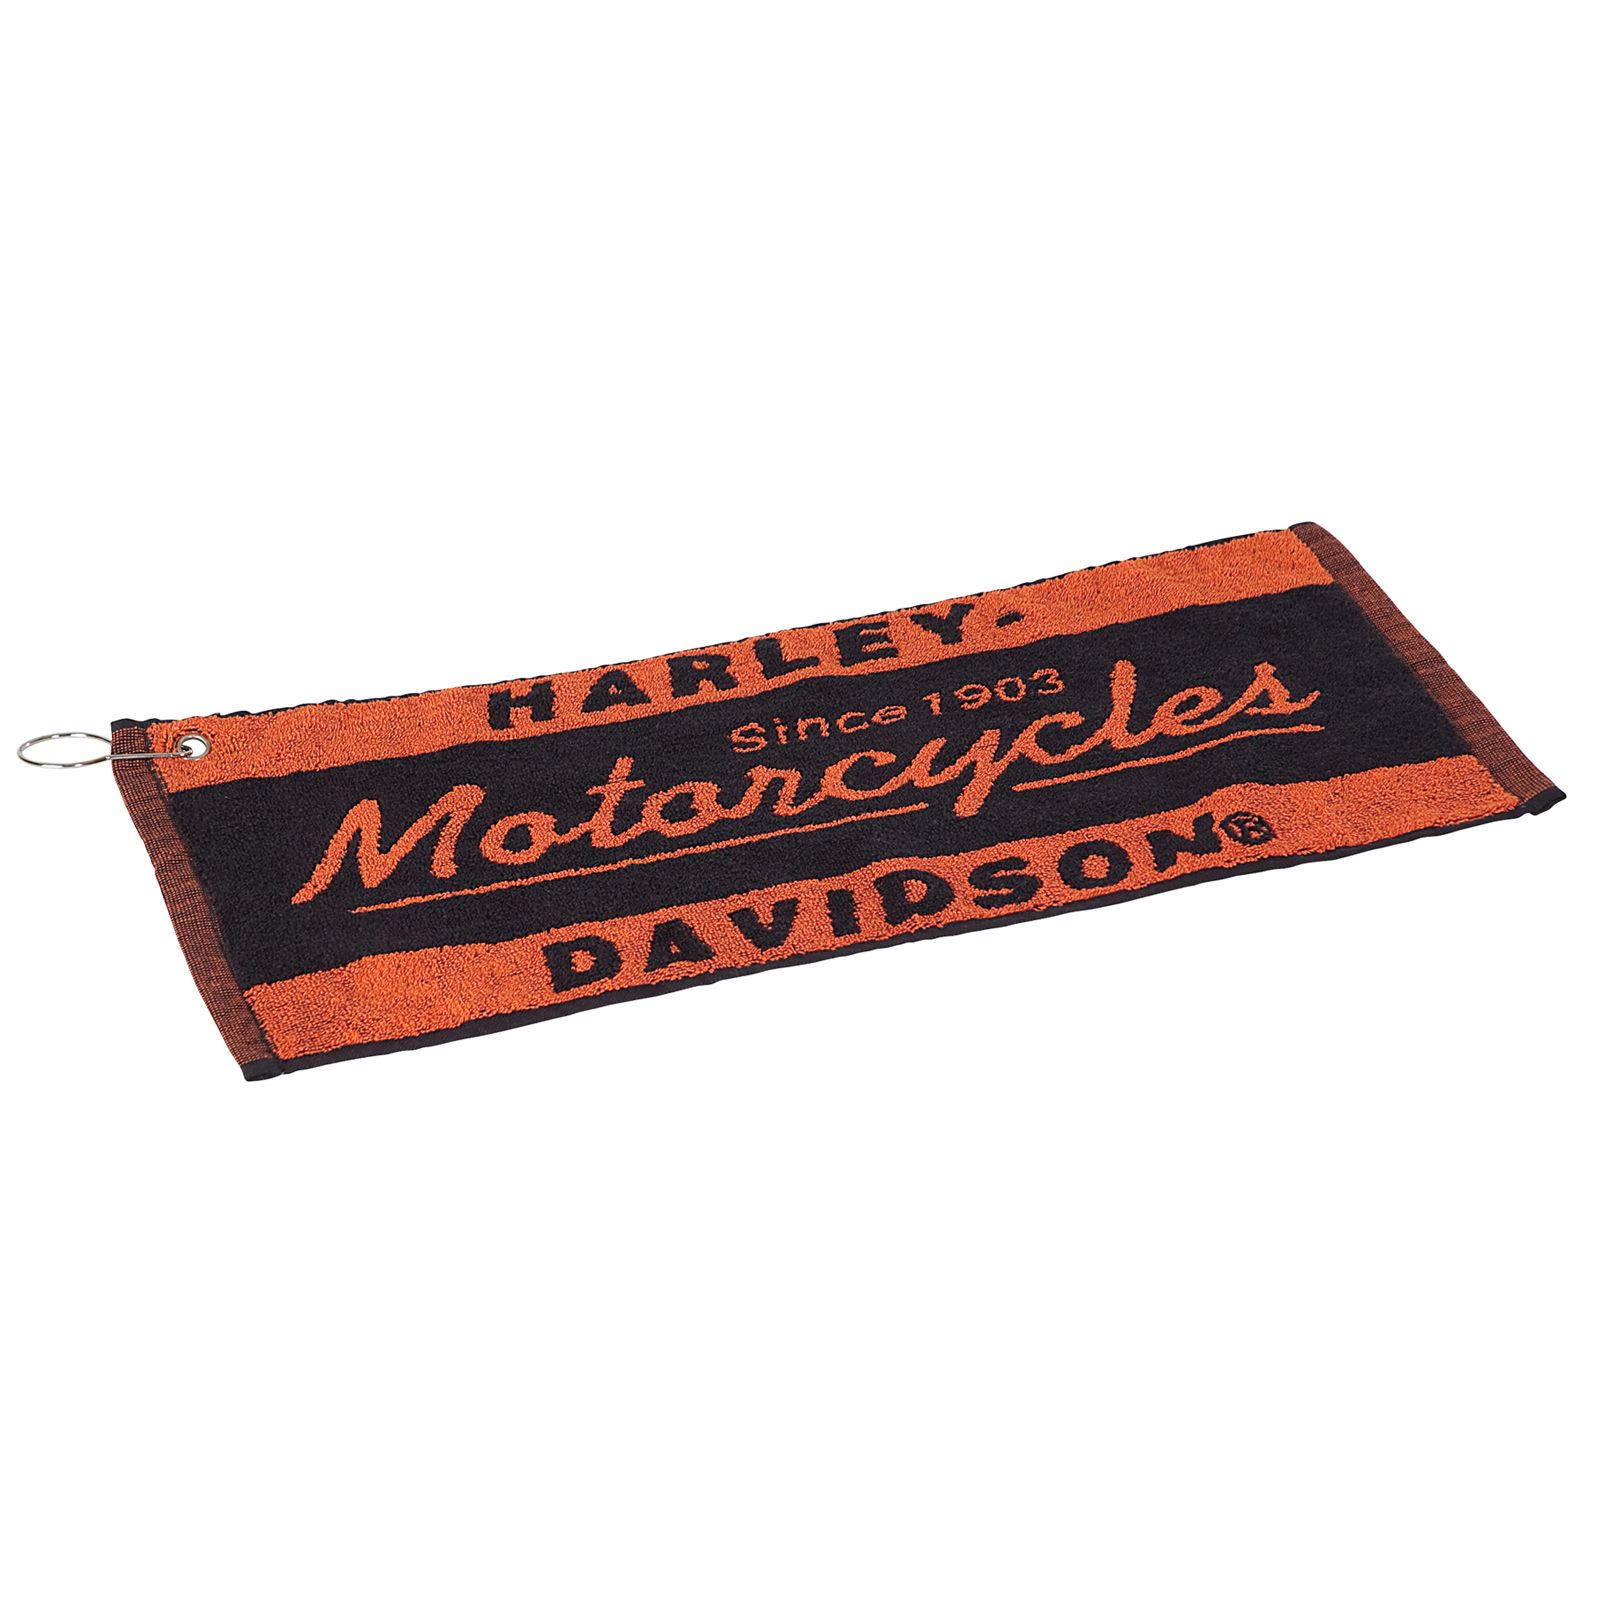 Harley-Davidson Motorcycles Bar Towel - Home - Kitchen - Kitchen Linens